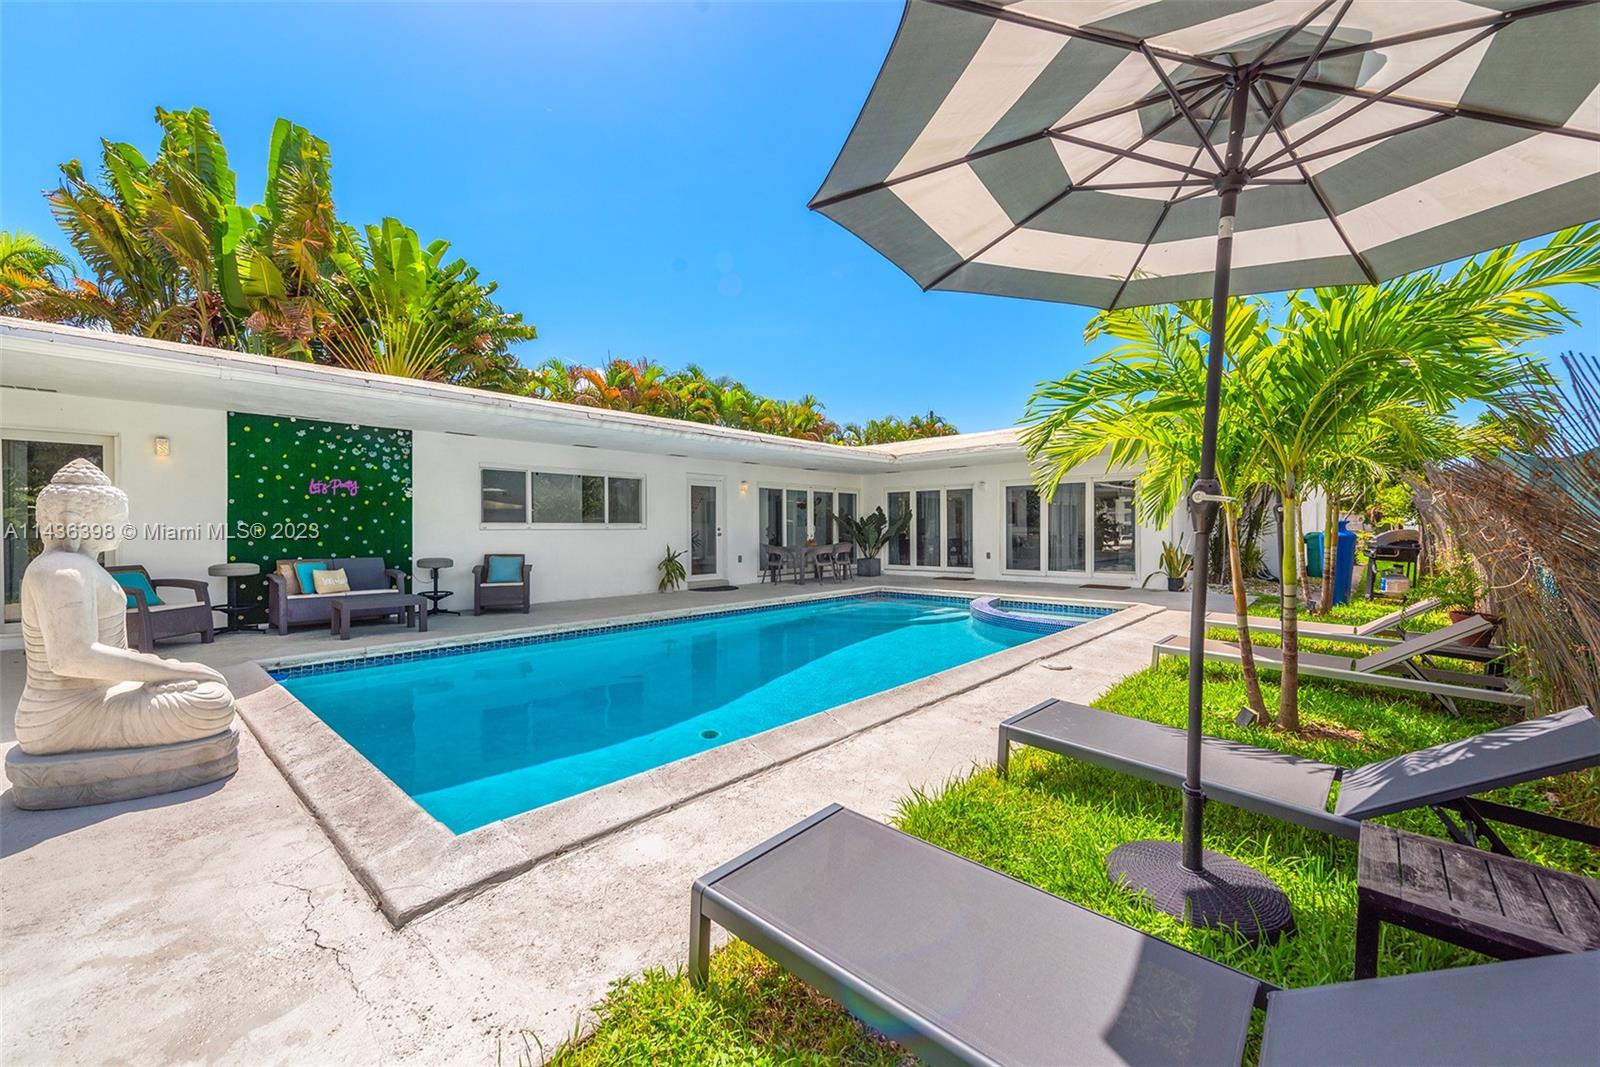 Rental Property at 1611 Nw South River Dr, Miami, Broward County, Florida - Bedrooms: 3 
Bathrooms: 3  - $8,500 MO.